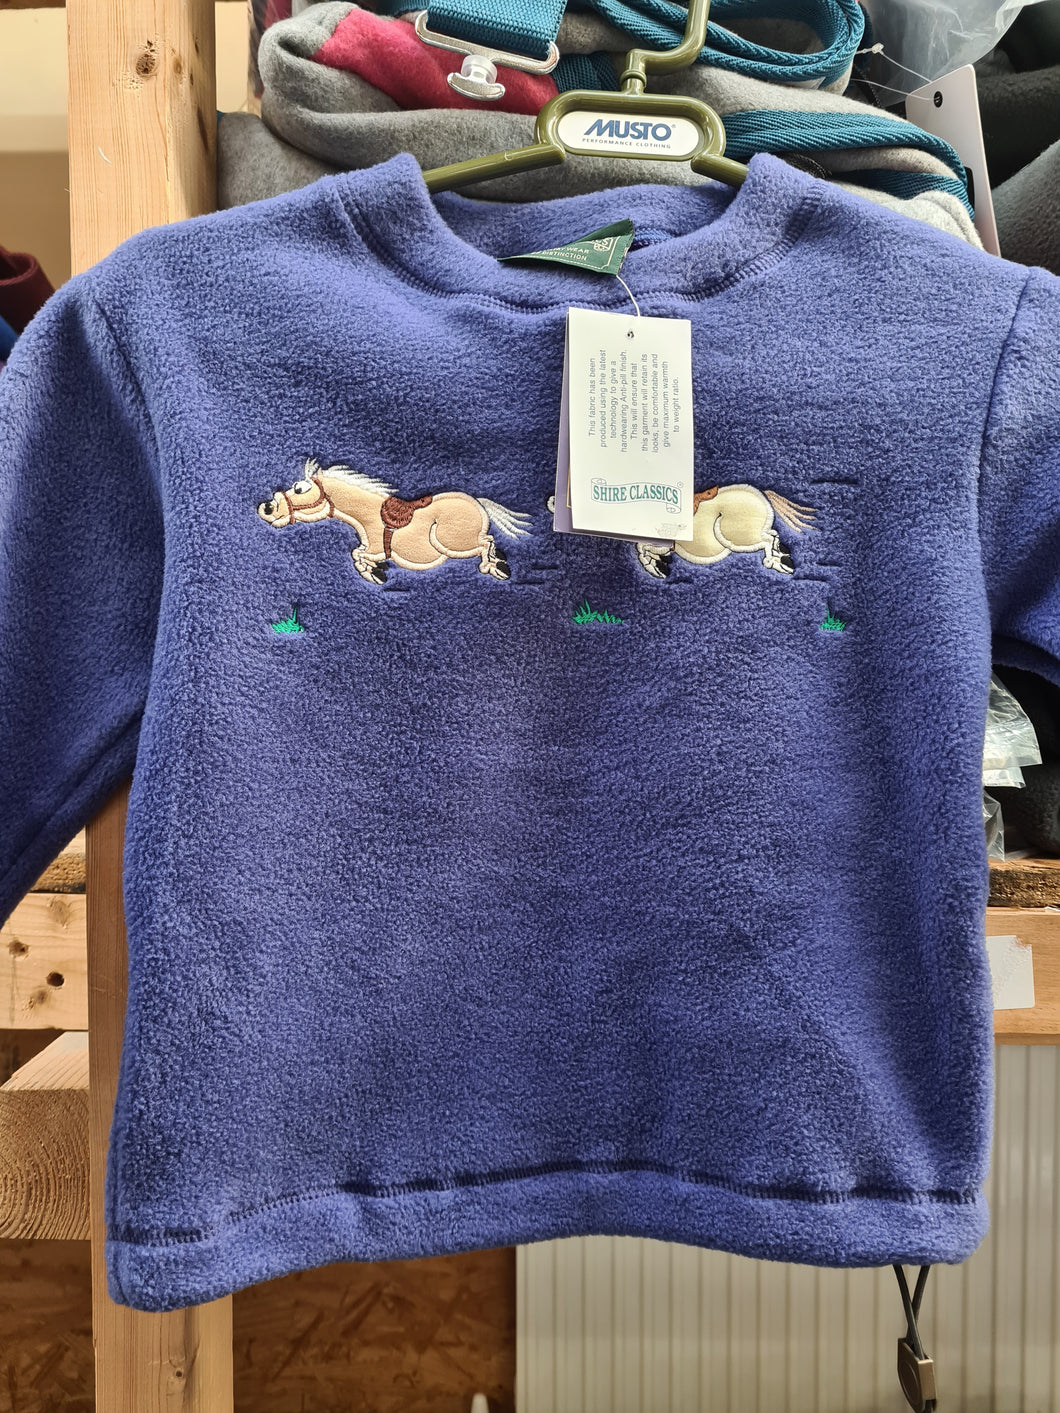 Kids small size shires fleece jumper FREE POSATGE 🟢